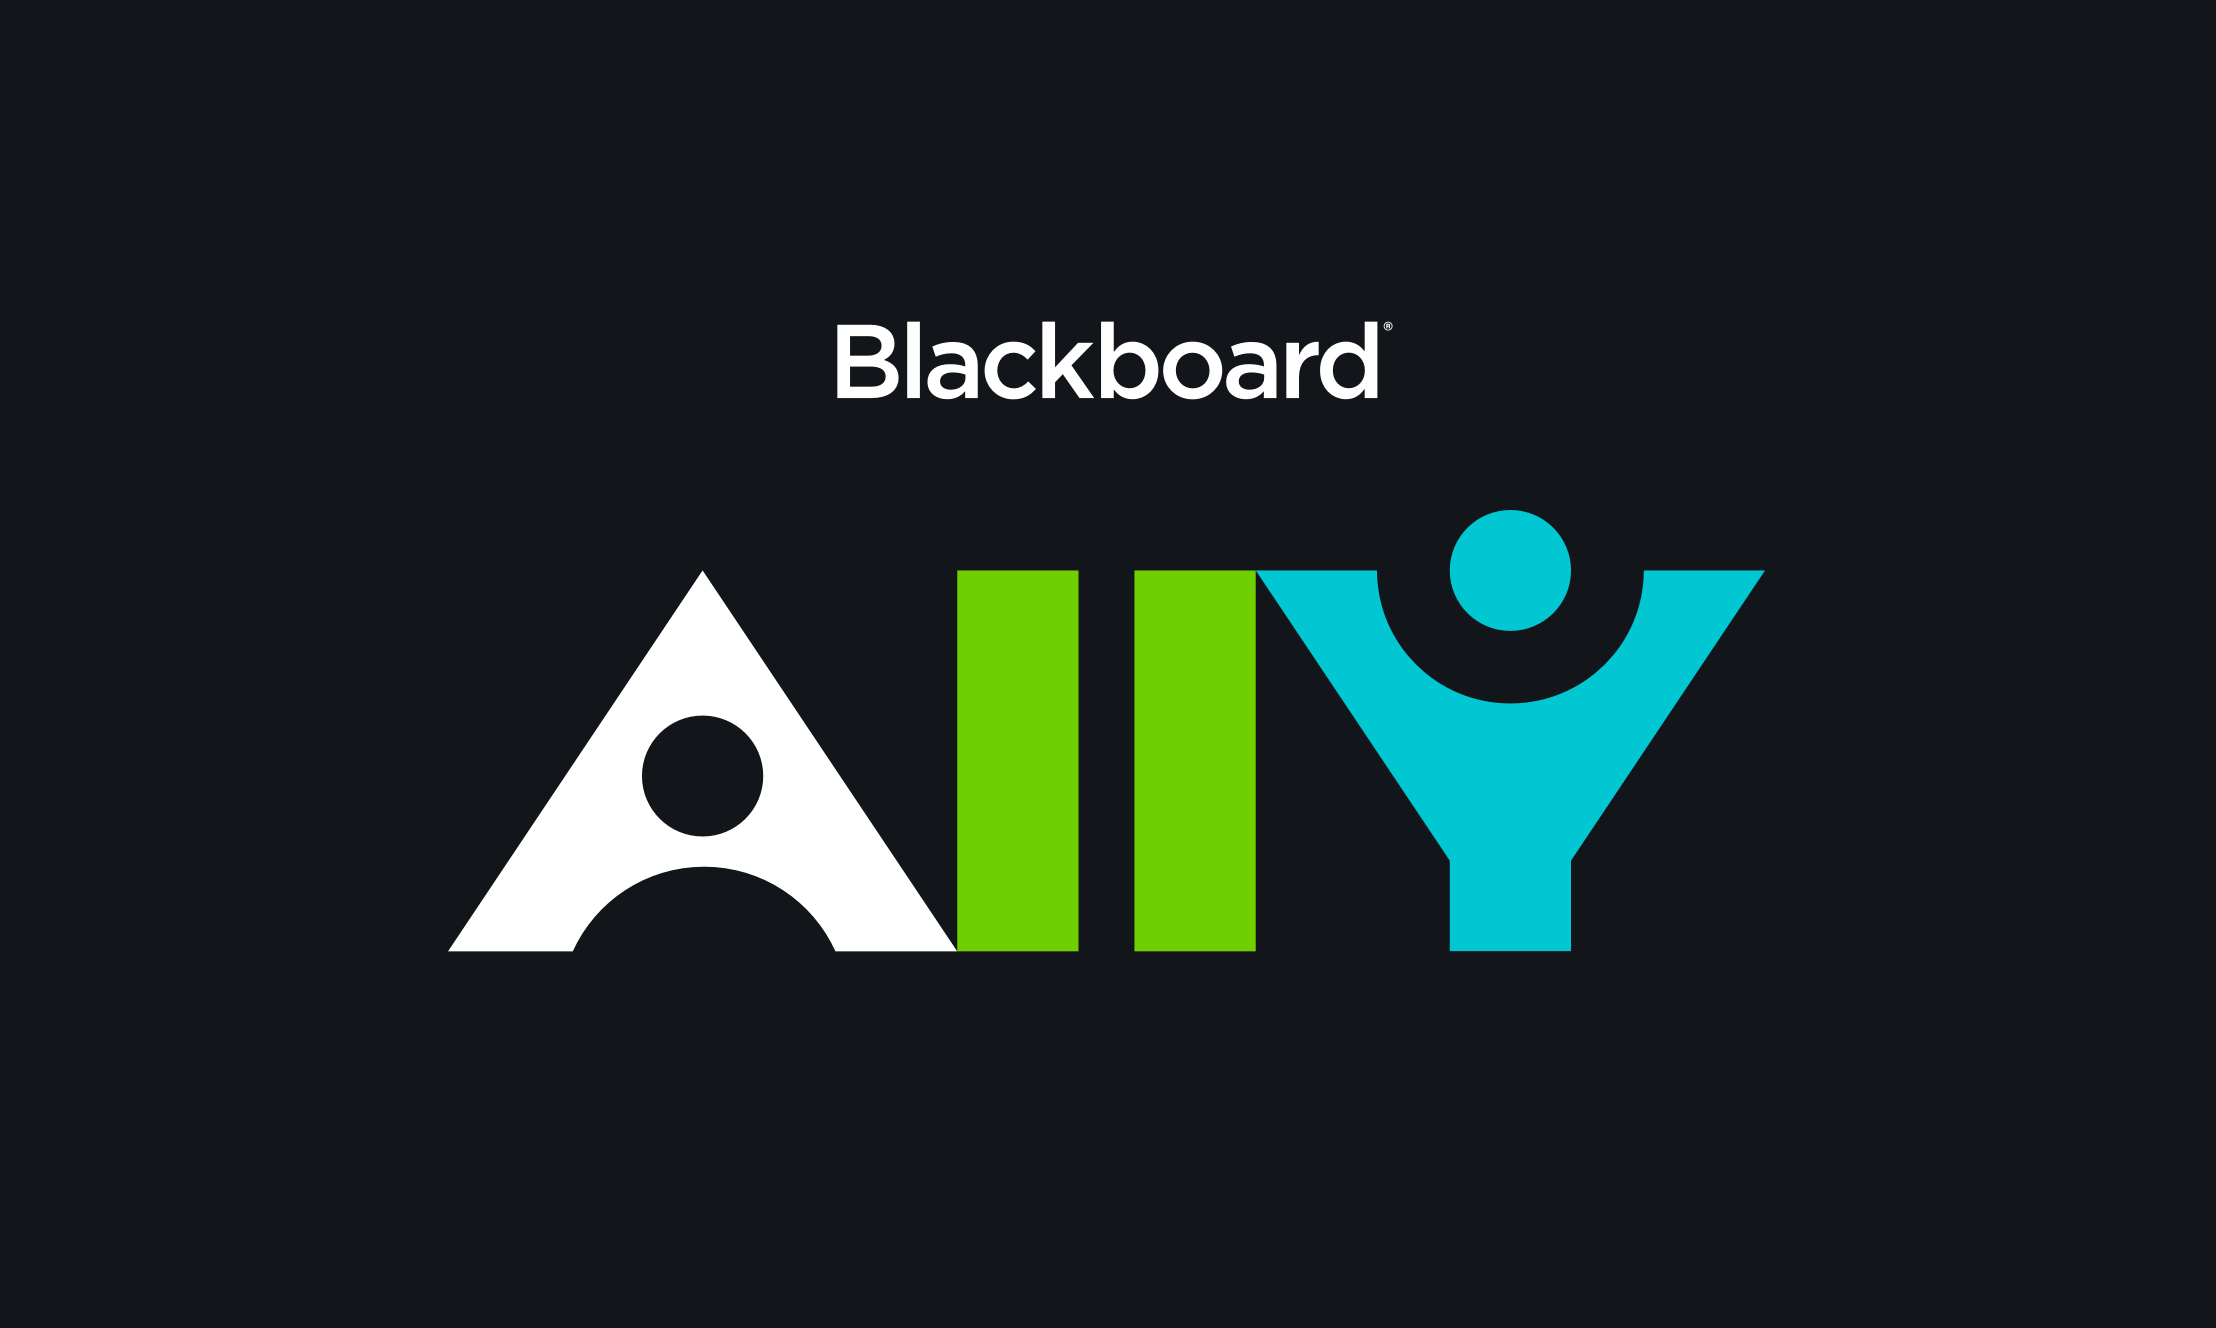 Blackboard Ally on black background